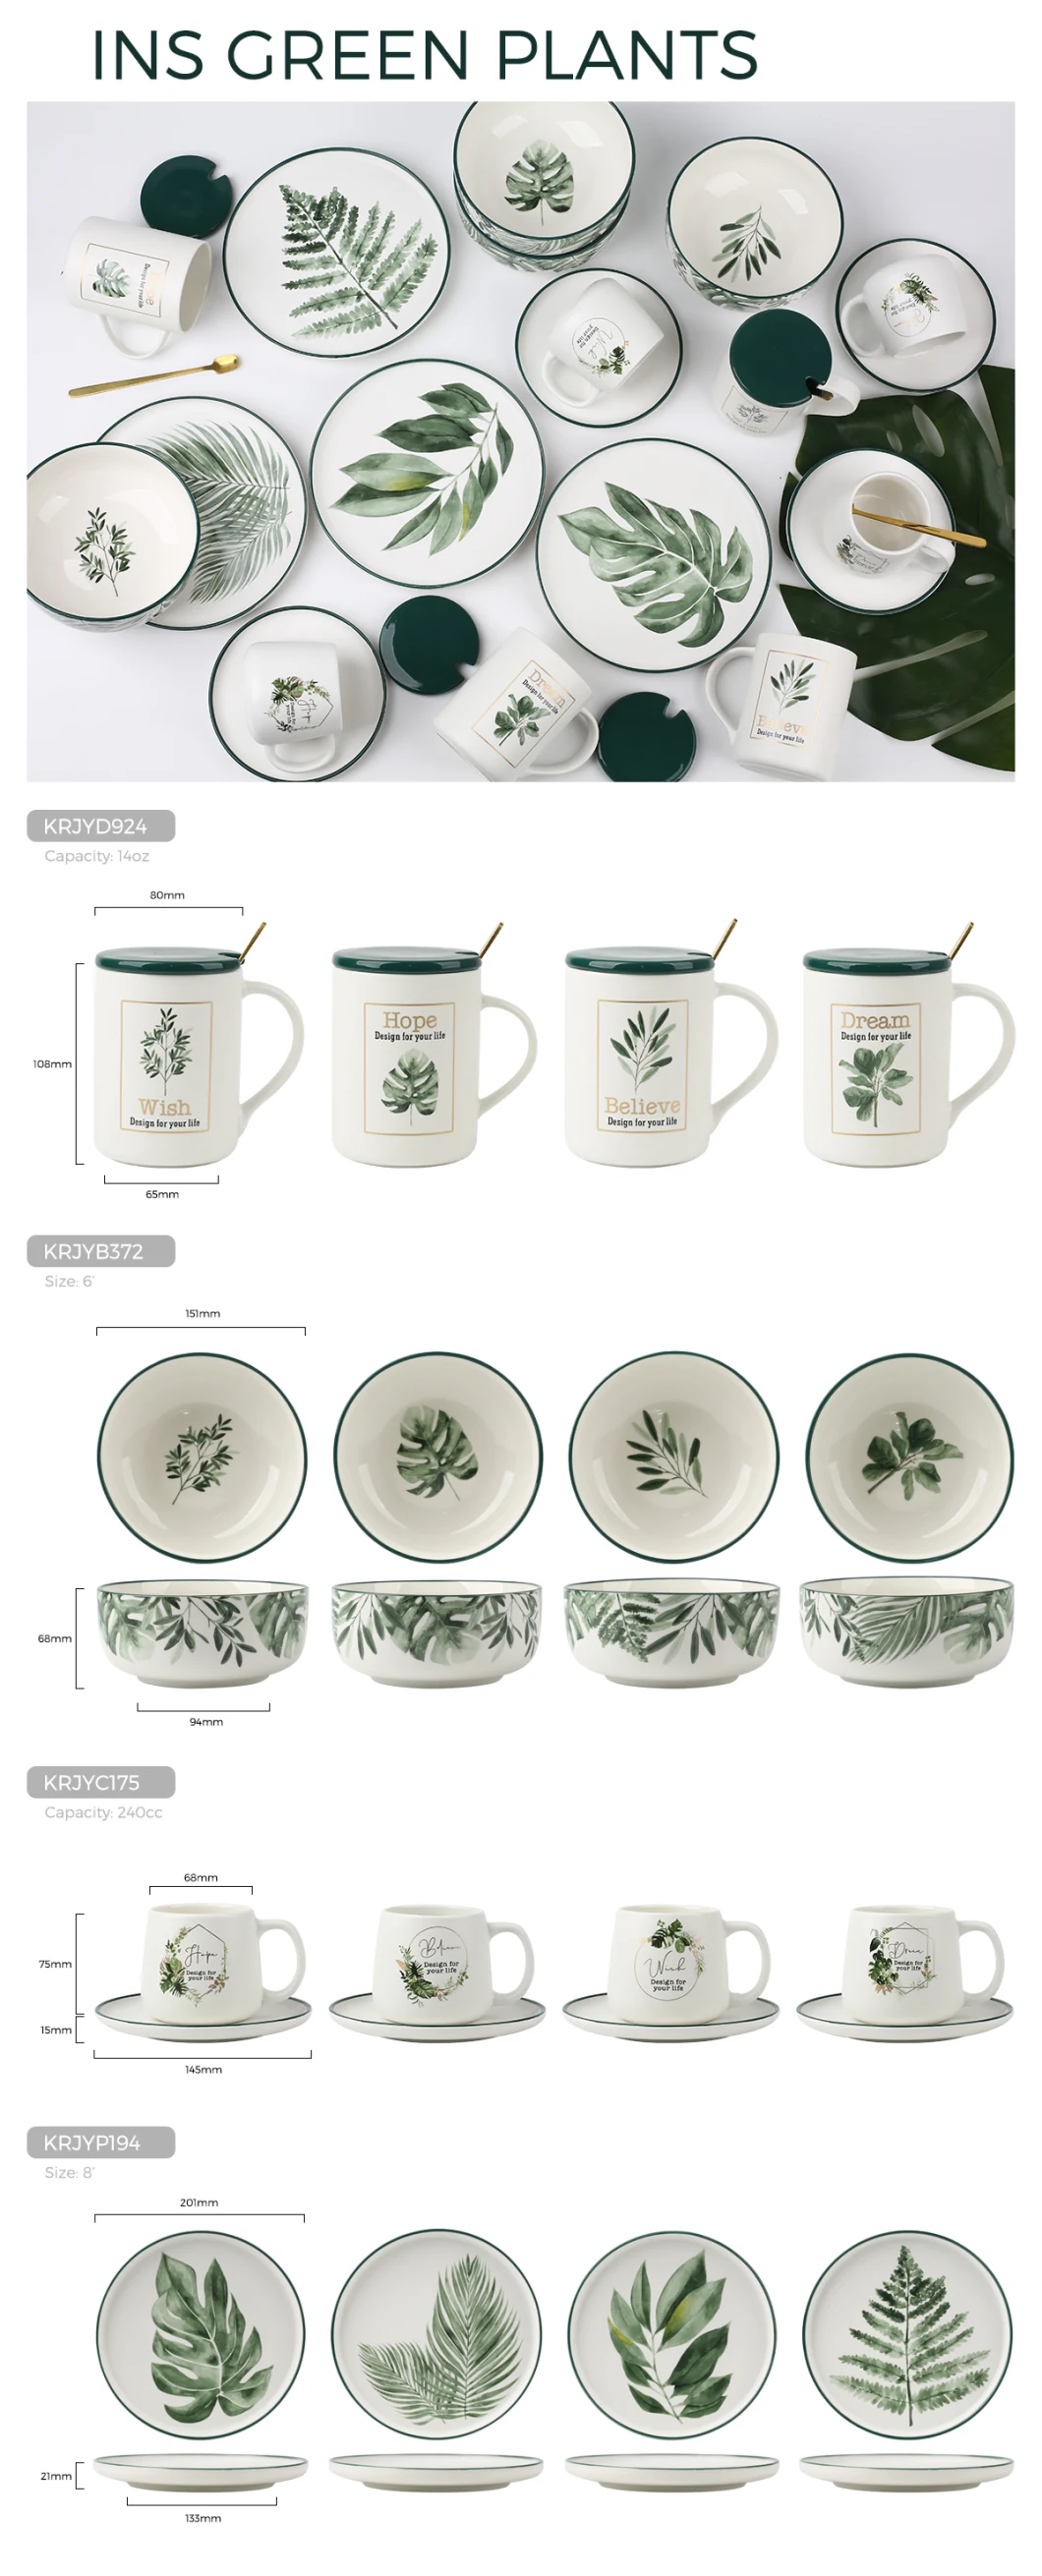 Kalring Ceramic Bowl Green Plants Design Color Rim Size 6&quot; Matt White Glaze Outside Bottom Inside Glossy White with Design for Daily Use